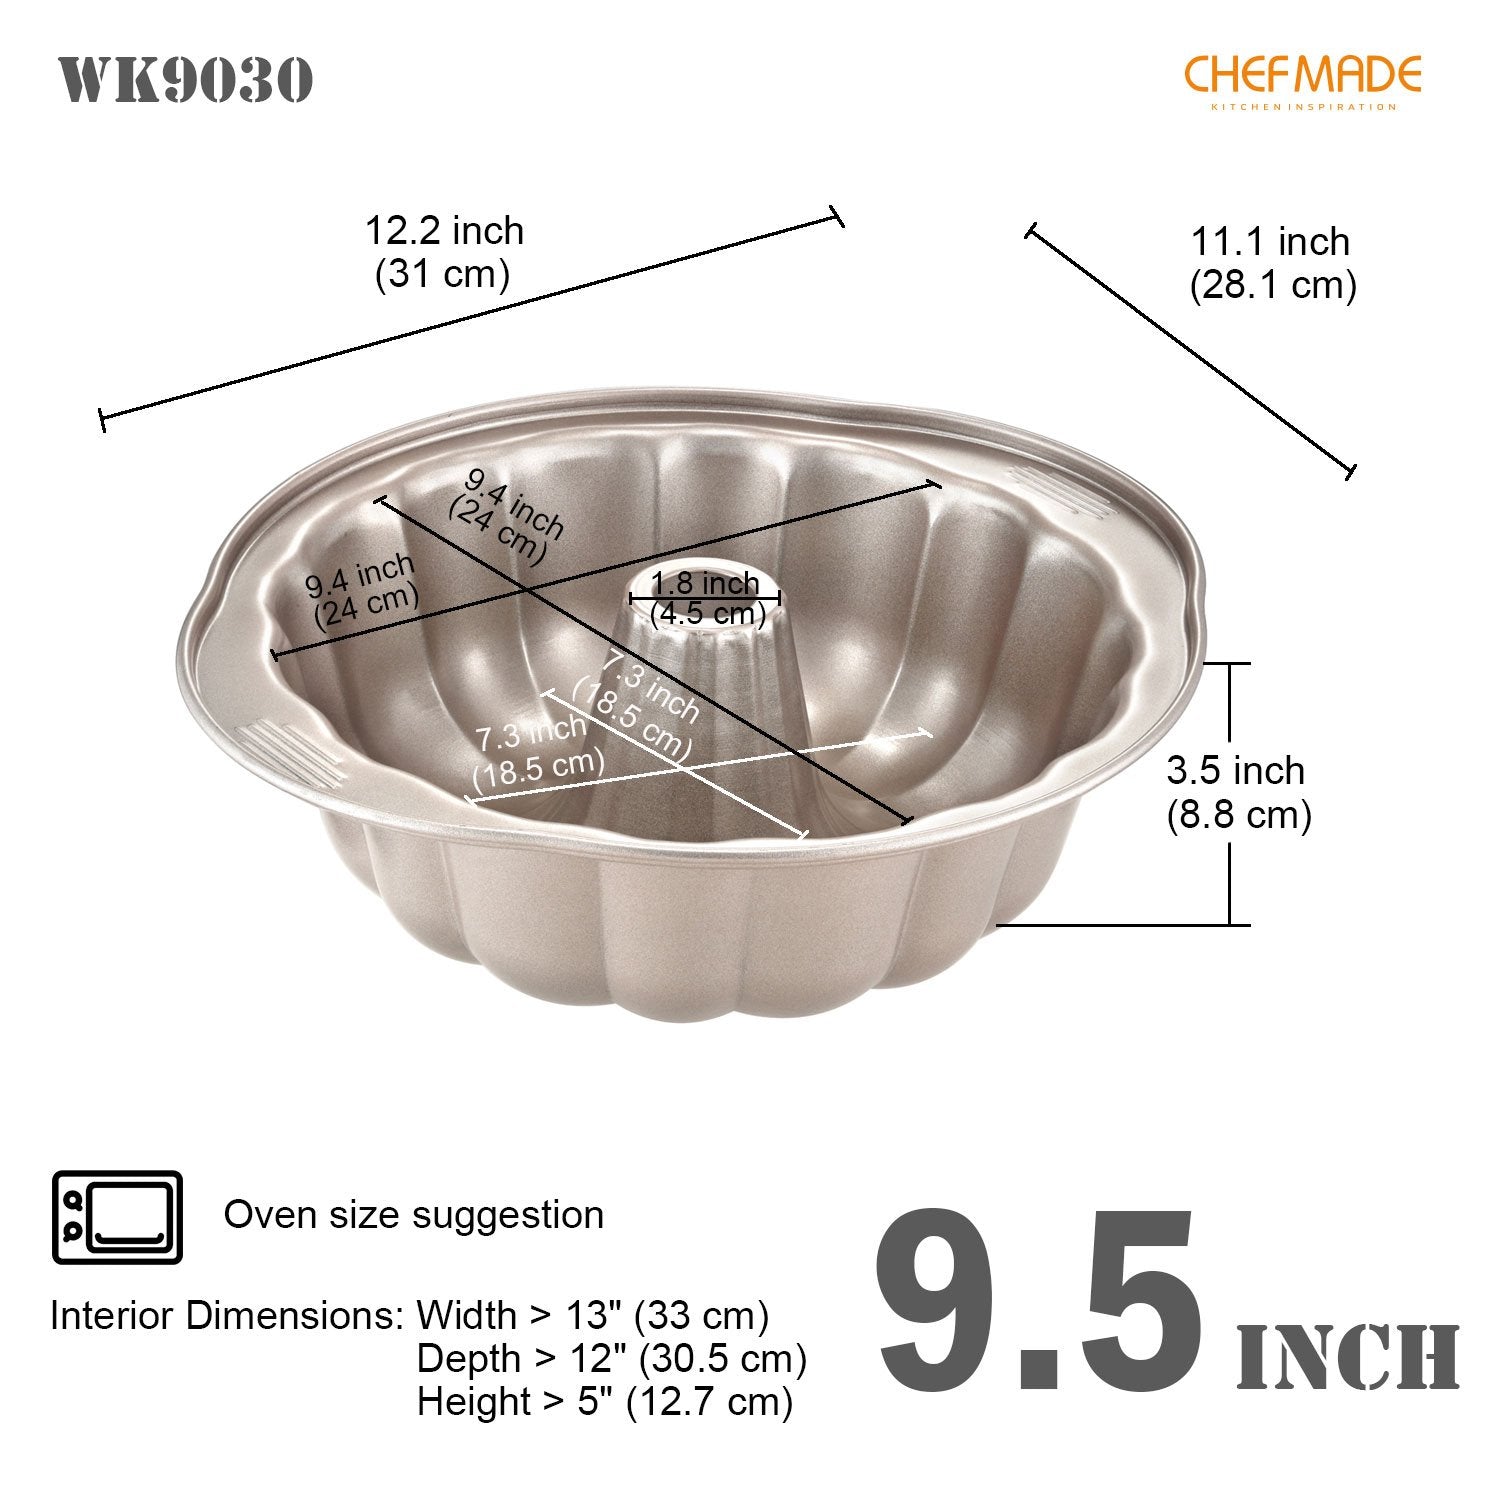 CHEFMADE 10" Non-Stick Bundt Cake Pan (WK9030)